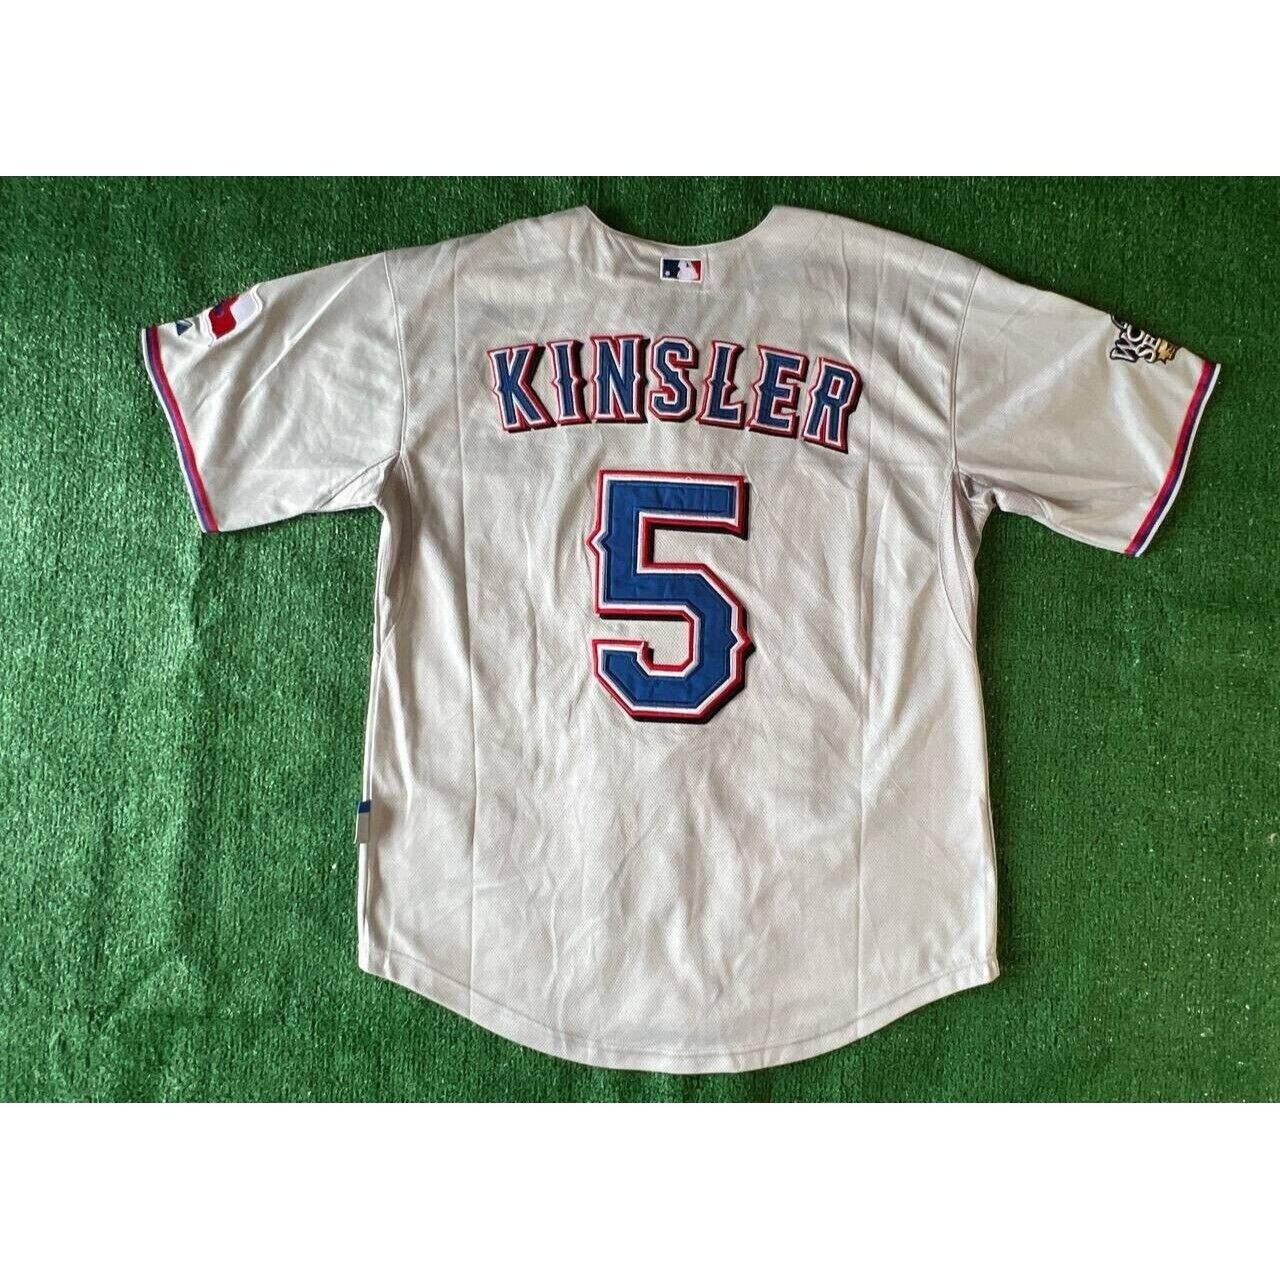 Ian Kinsler #5 Texas Rangers 2010 World Series Authentic Majestic Jersey Size 52